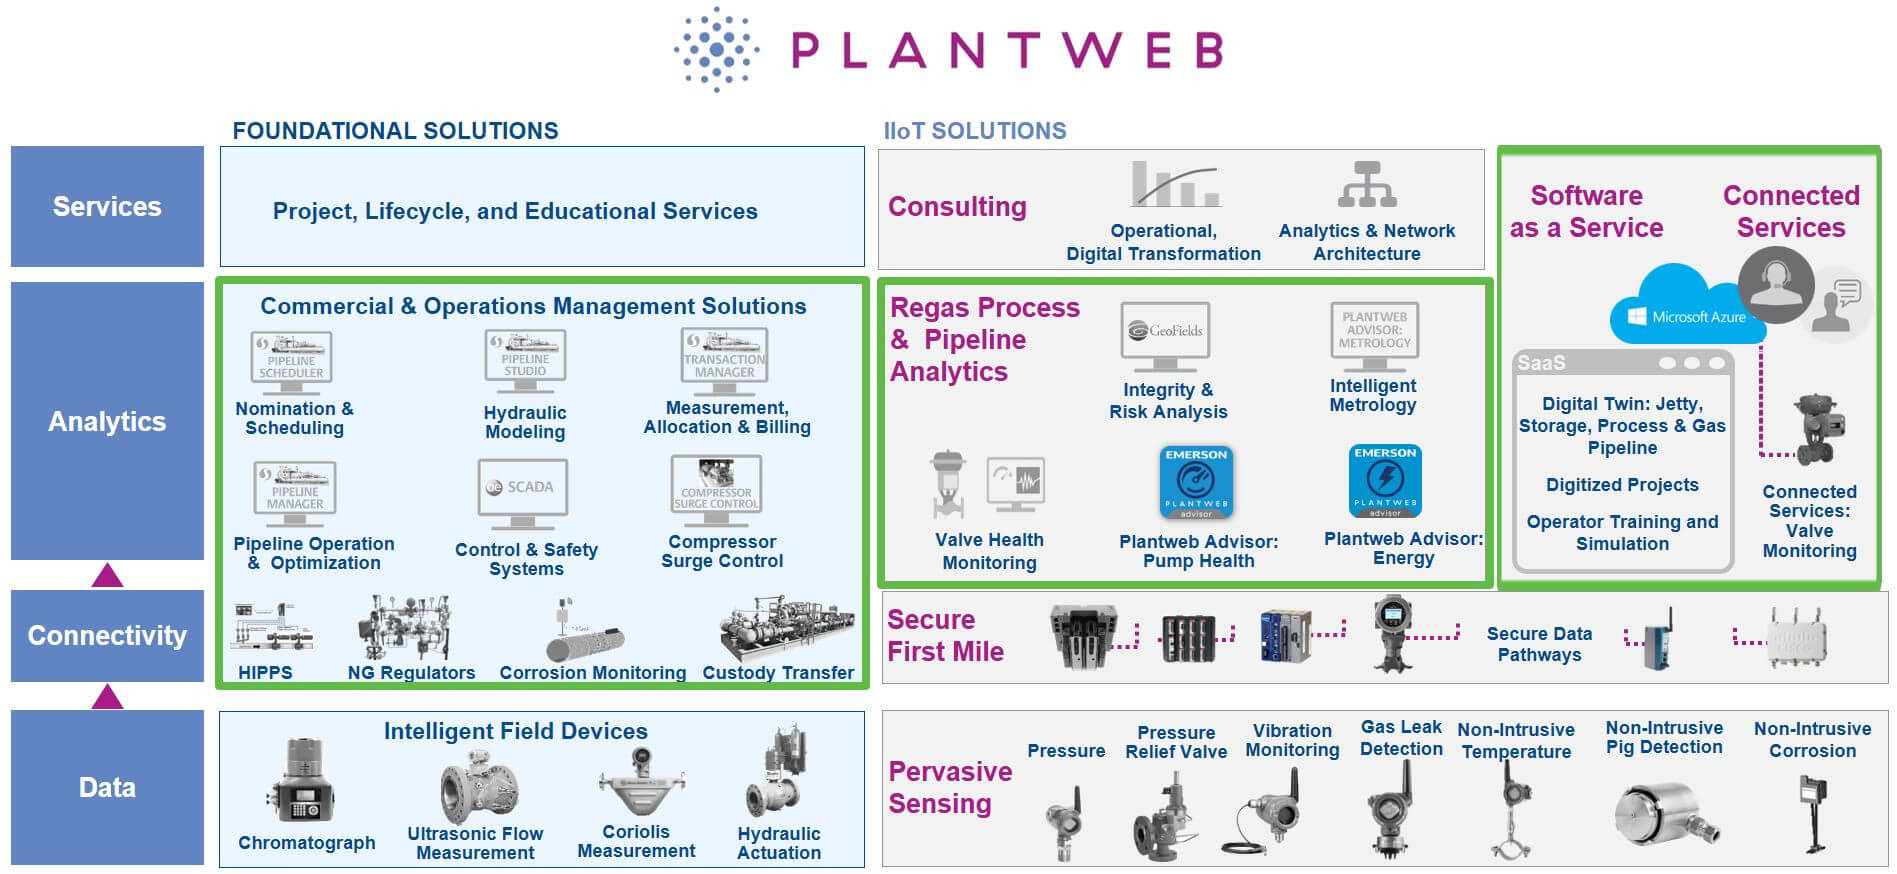 LNG Regasification with Plantweb digital ecosystem